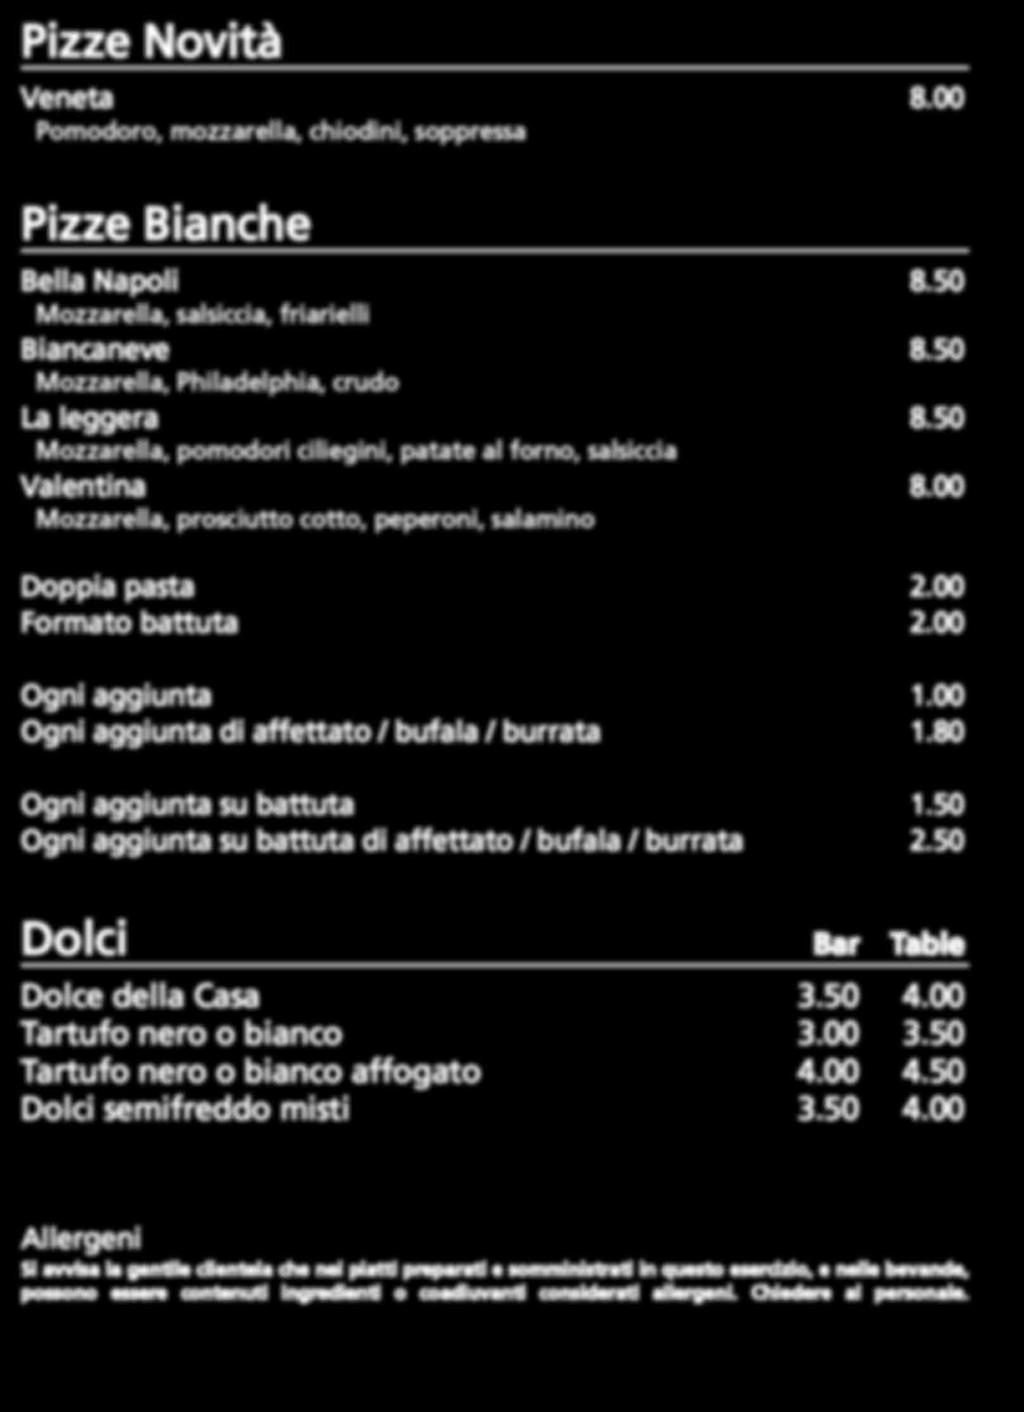 Pizze Novità Veneta 8.00 Pomodoro, mozzarella, chiodini, soppressa Pizze Bianche Bella Napoli 8.